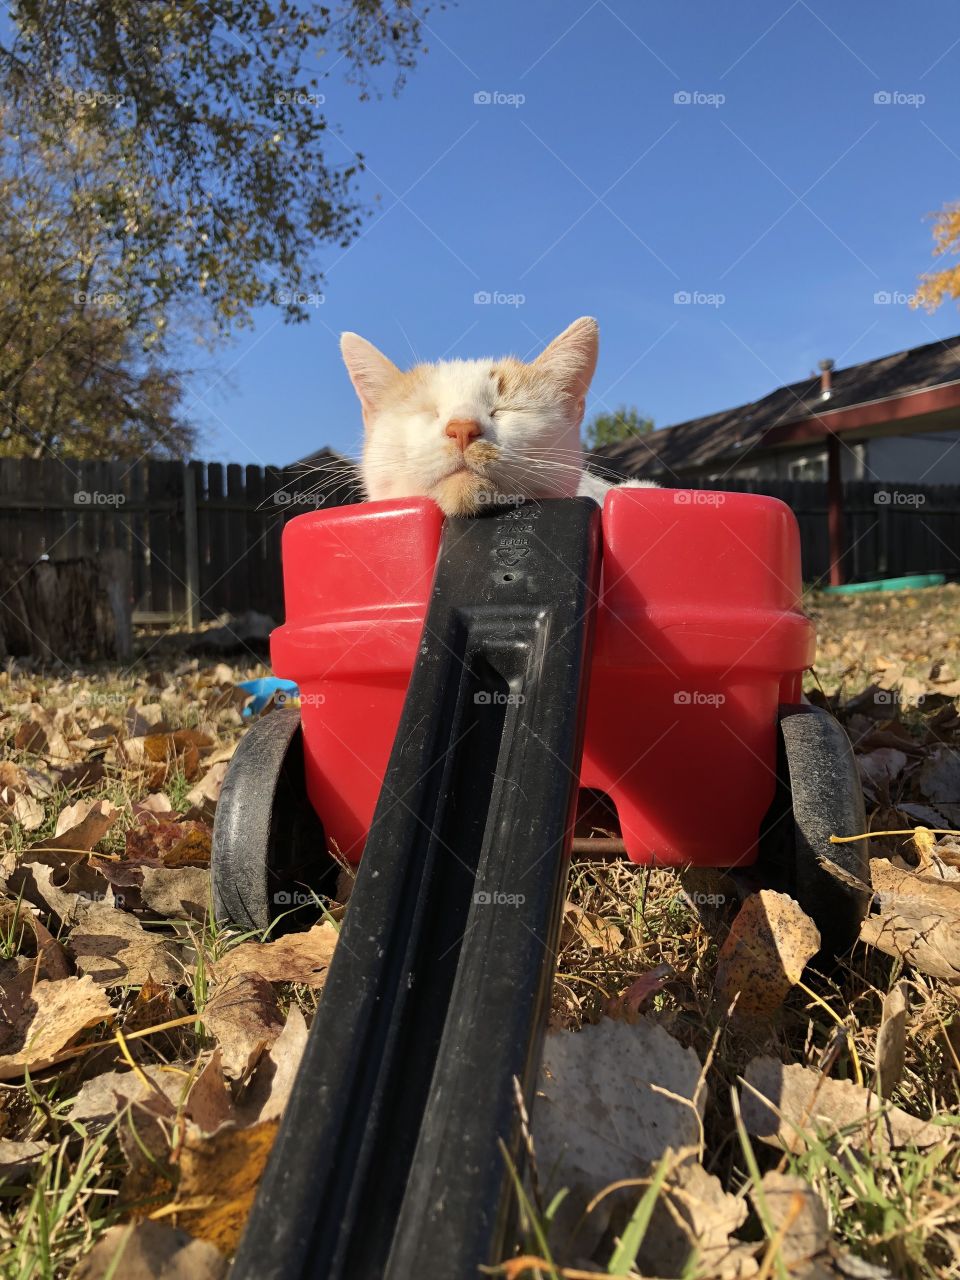 Cute angle of a precious cat in a small wagon